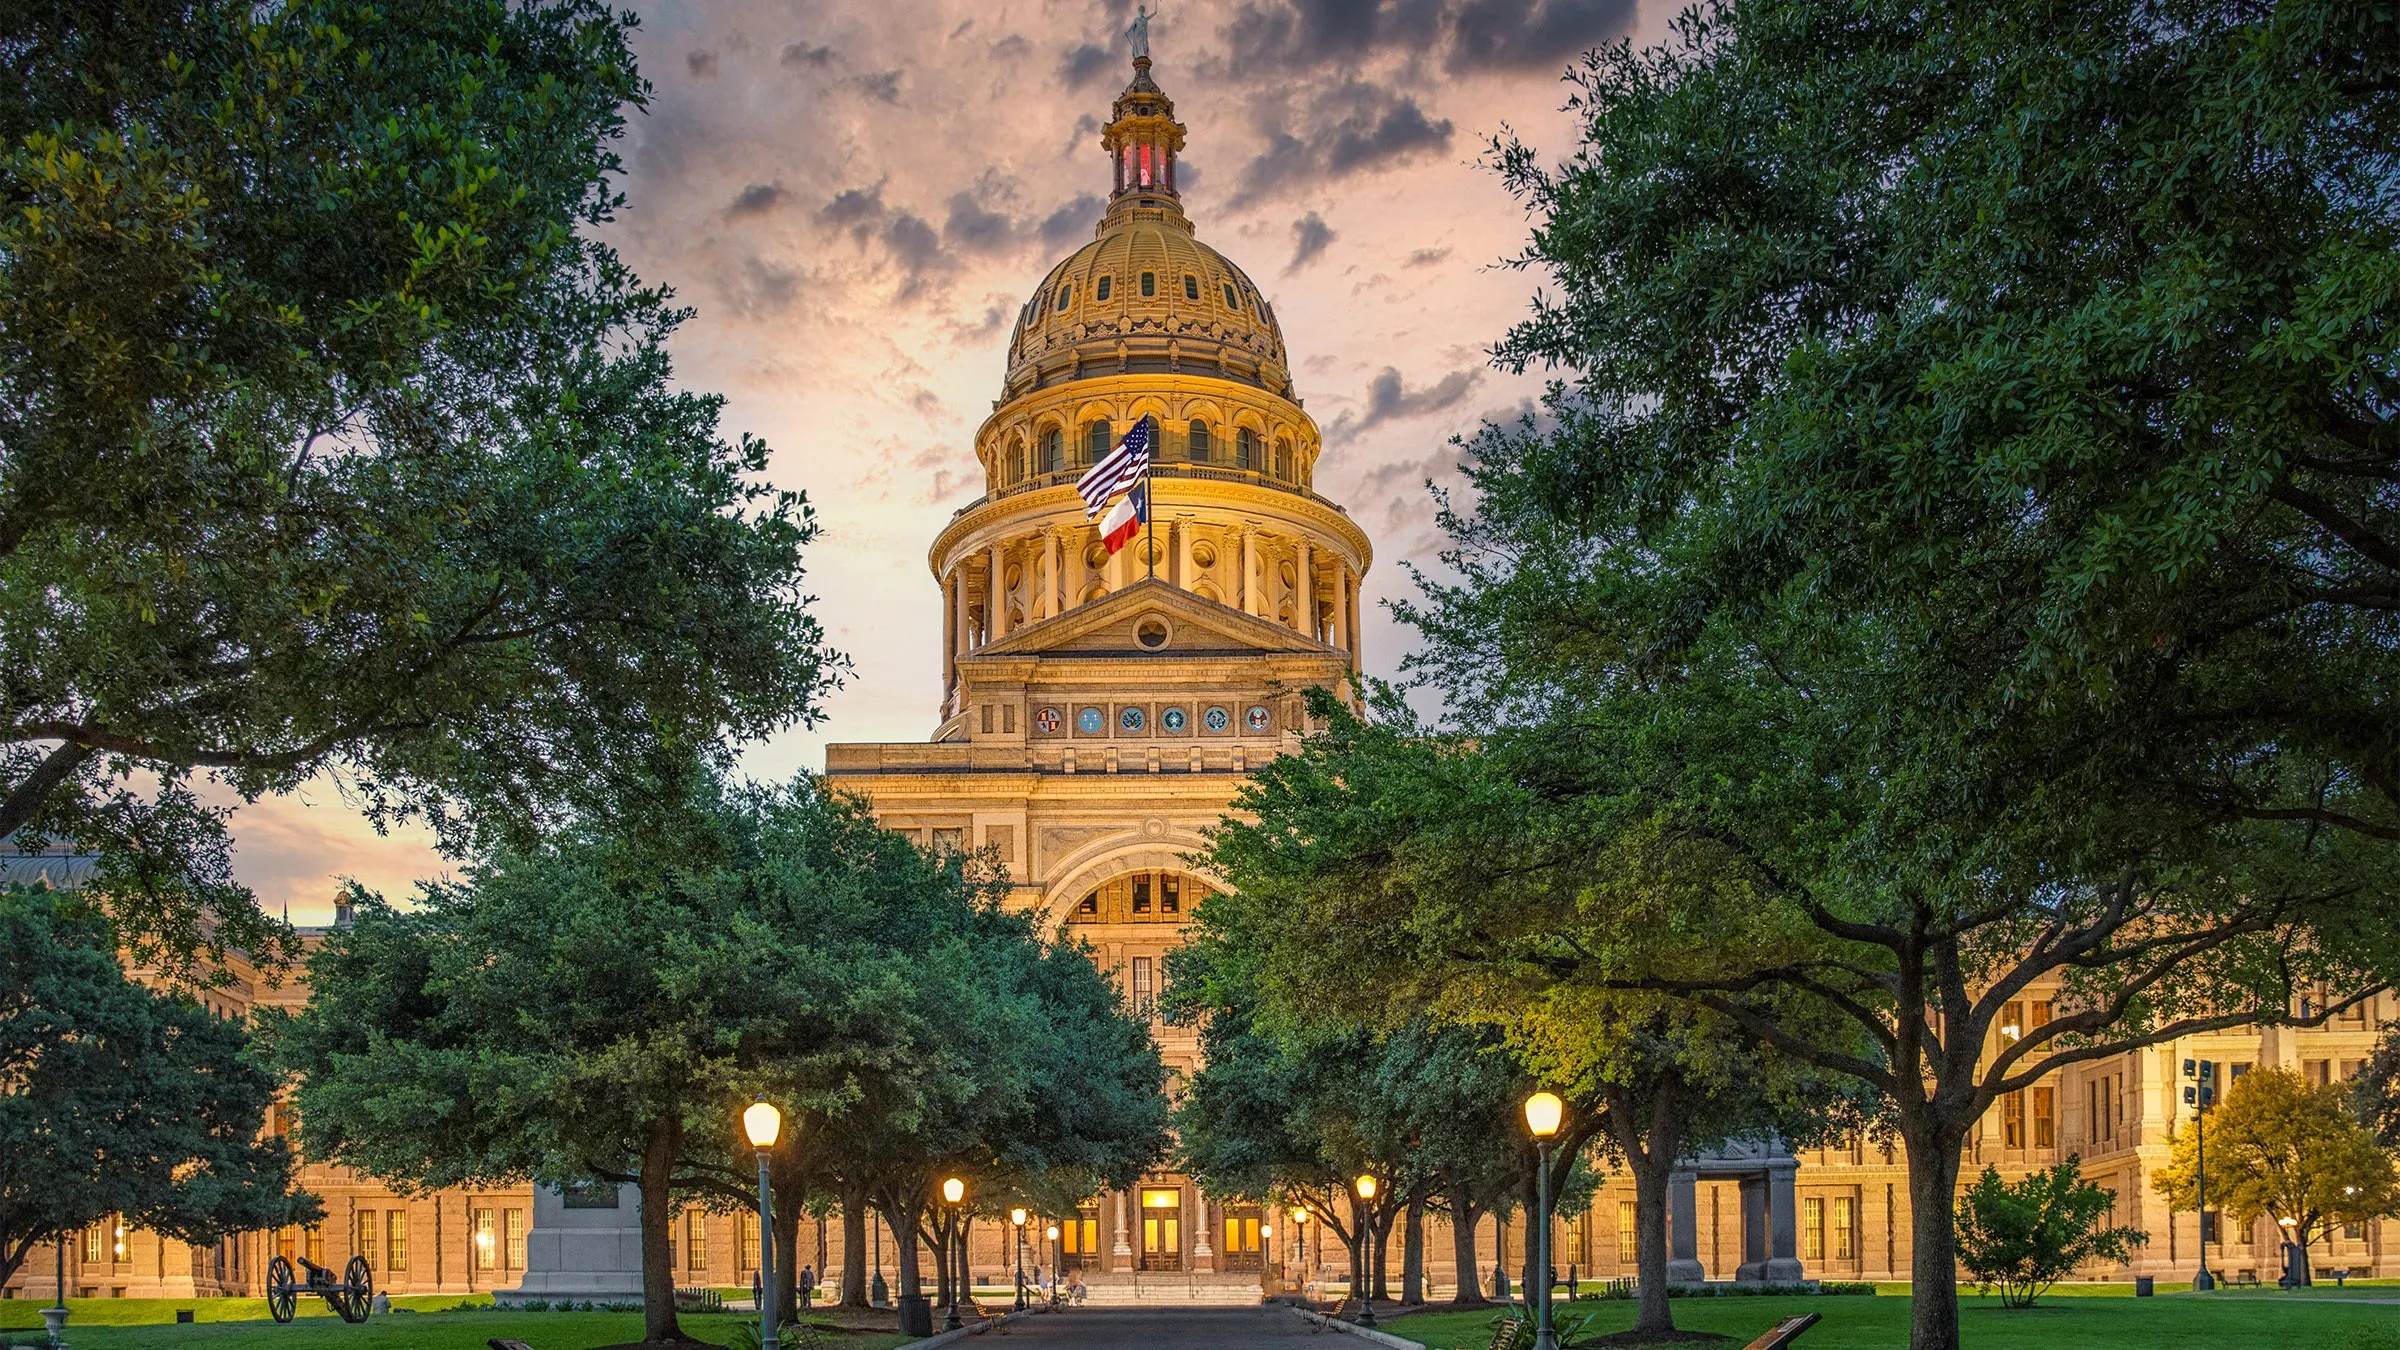 The Texas State House in Austin. Image: jdross75/Shutterstock